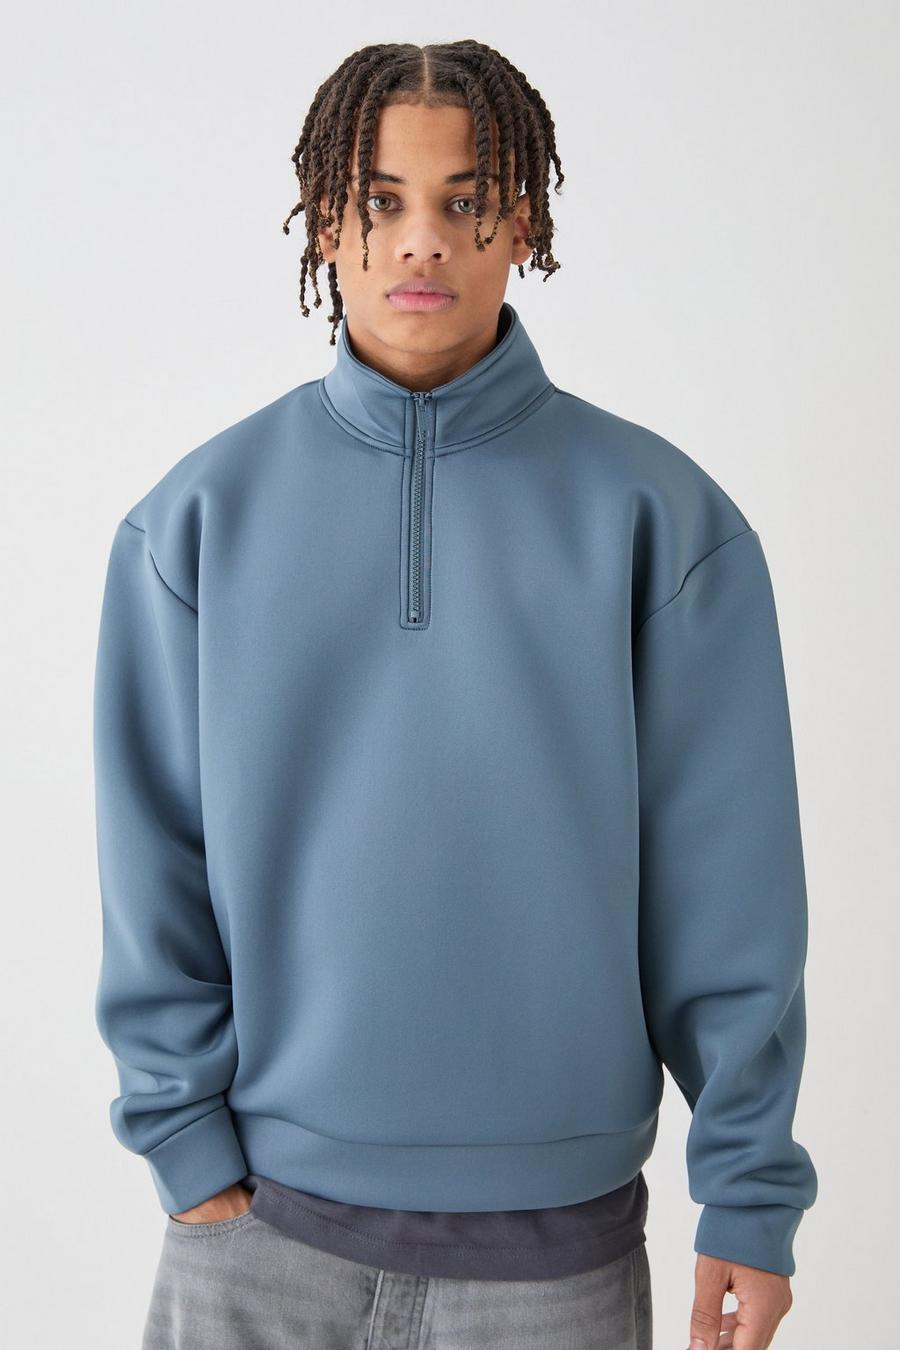 Kastiges Oversize Scuba-Sweatshirt mit Reißverschluss, Slate blue